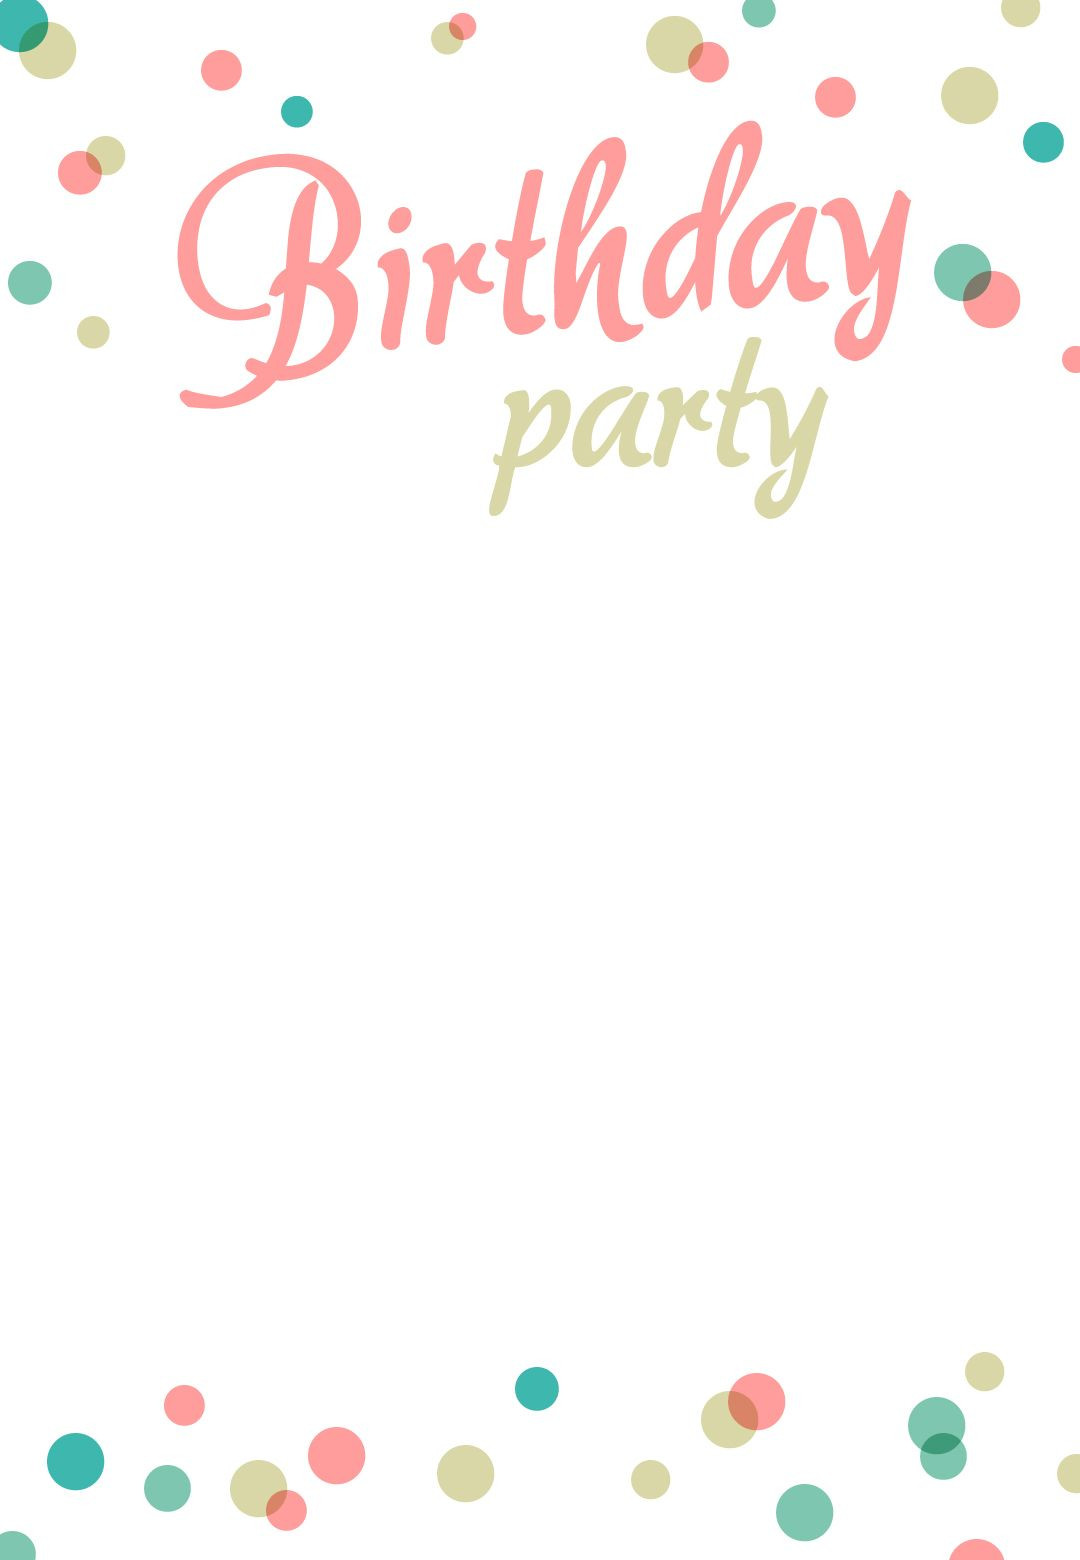 Free Printable Birthday Invitations
 Birthday Party Invitation Free Printable